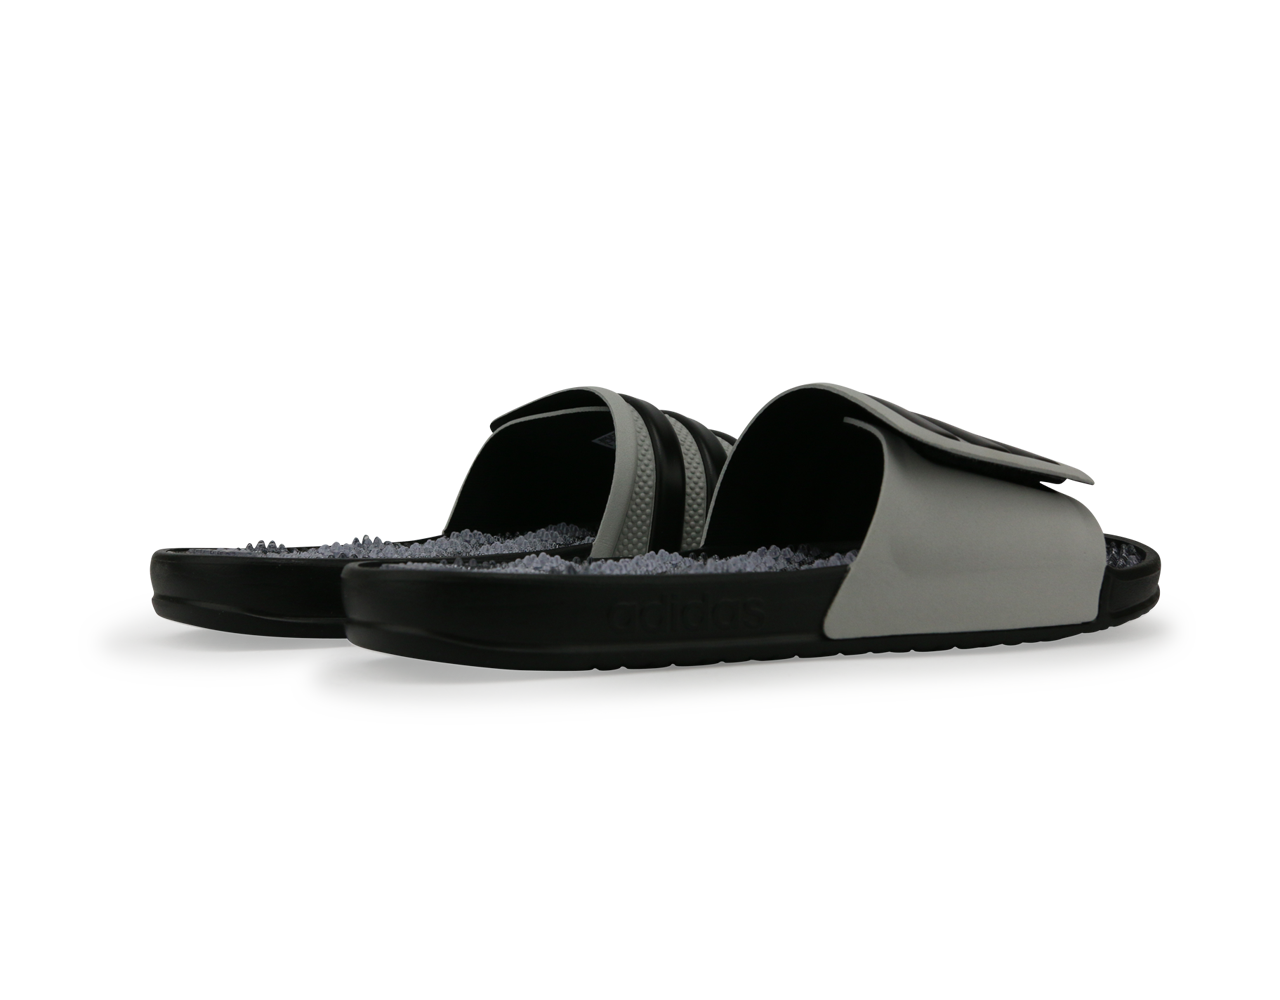 adidas Men's Adissage 2.0 Stripes Sandal Onix/Core Black